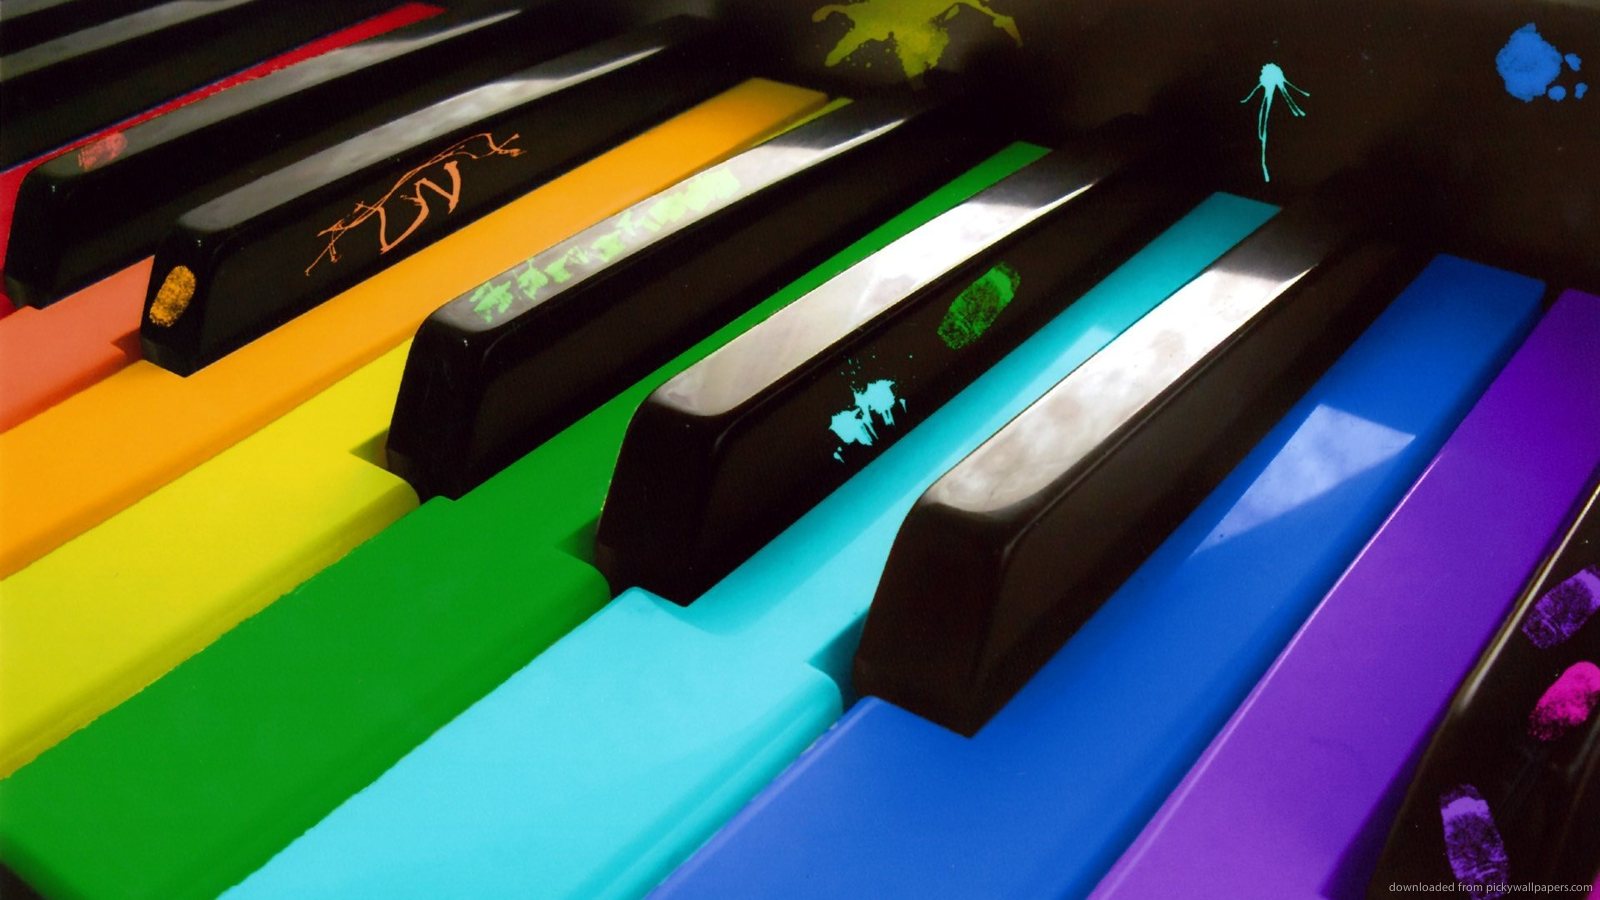  1600x900 colorful piano keys wallpaper colorful piano keys for